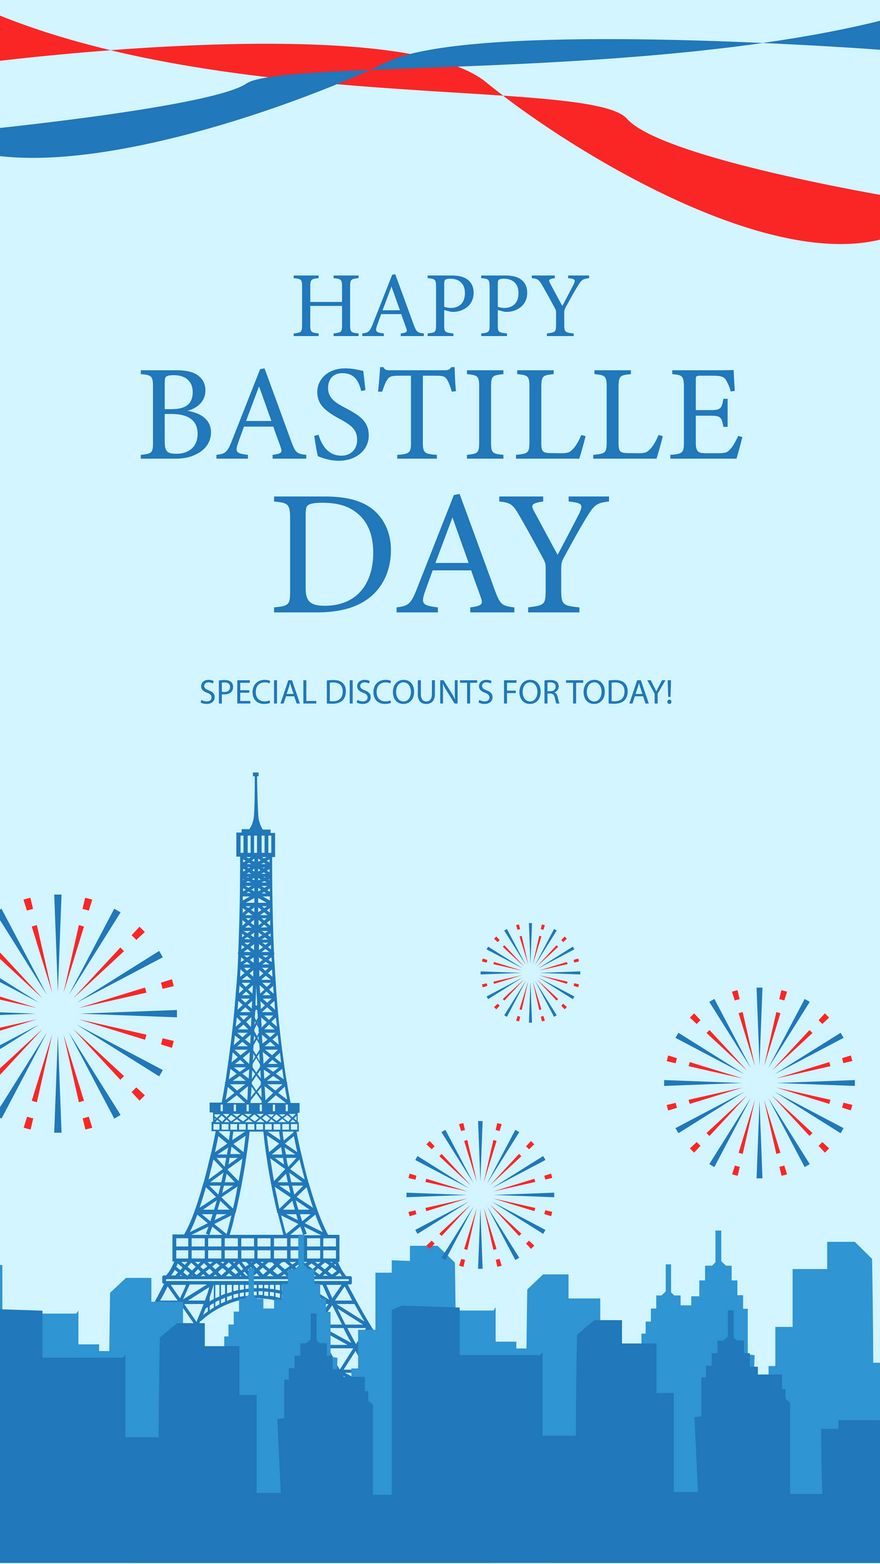 Bastille Day Invitation Background